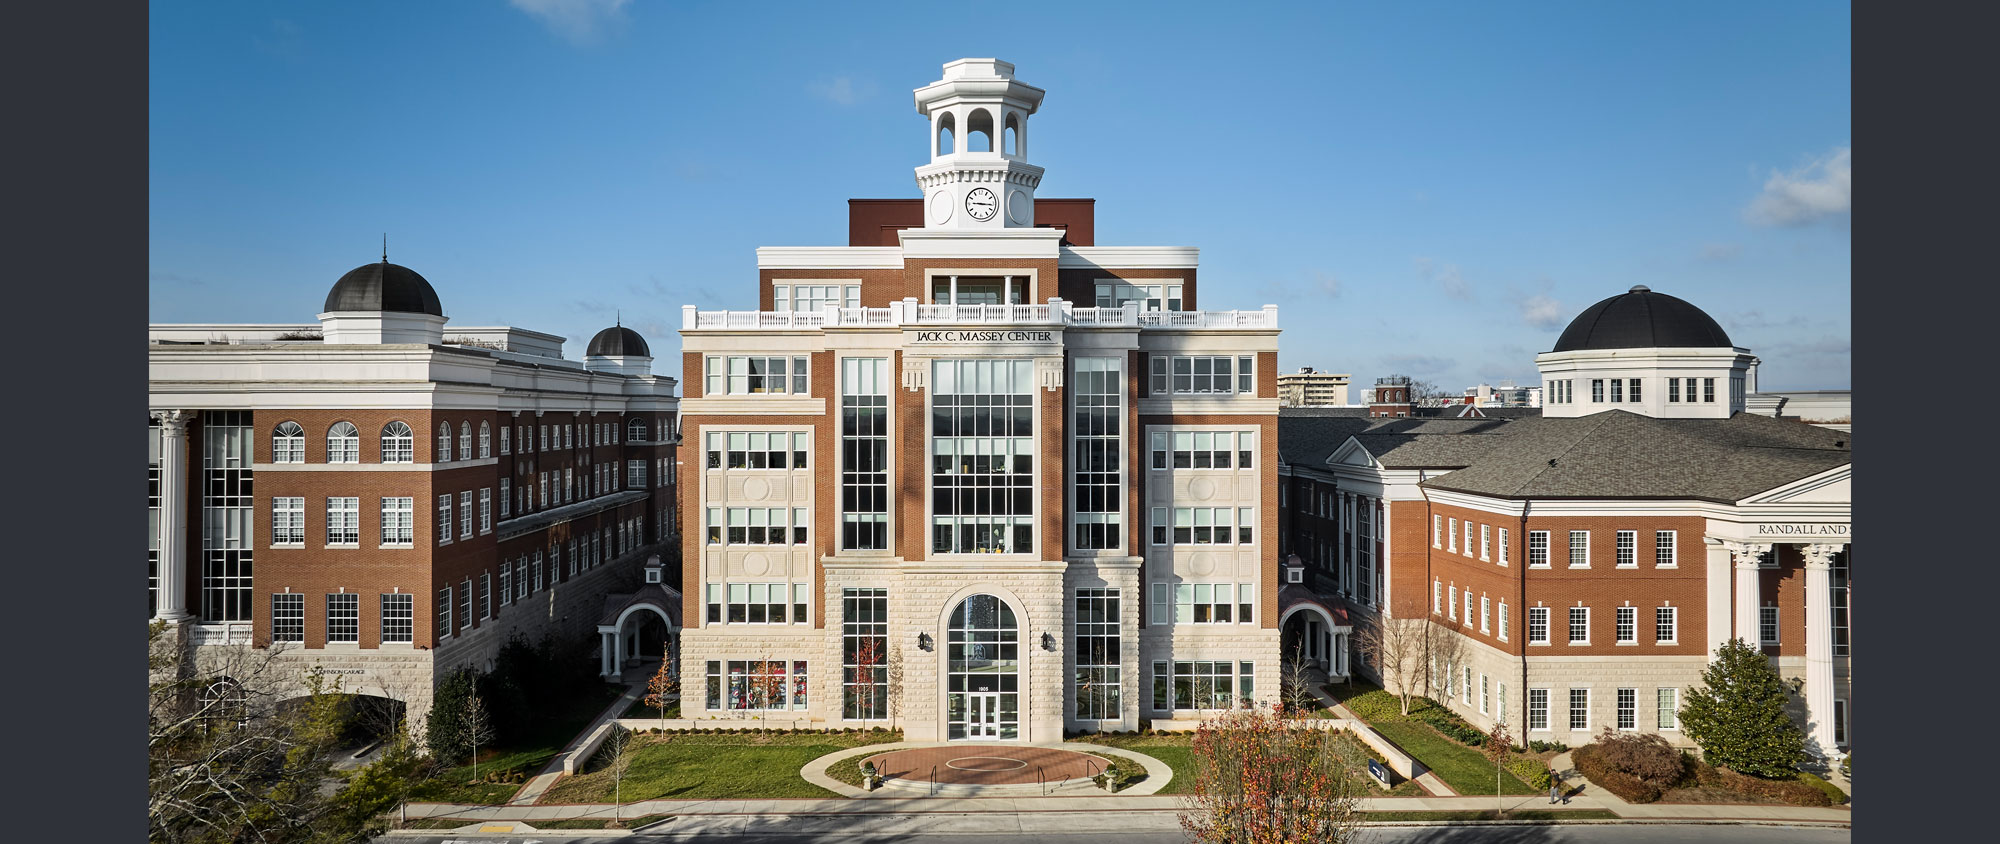 Belmont University – Jack C. Massey Center